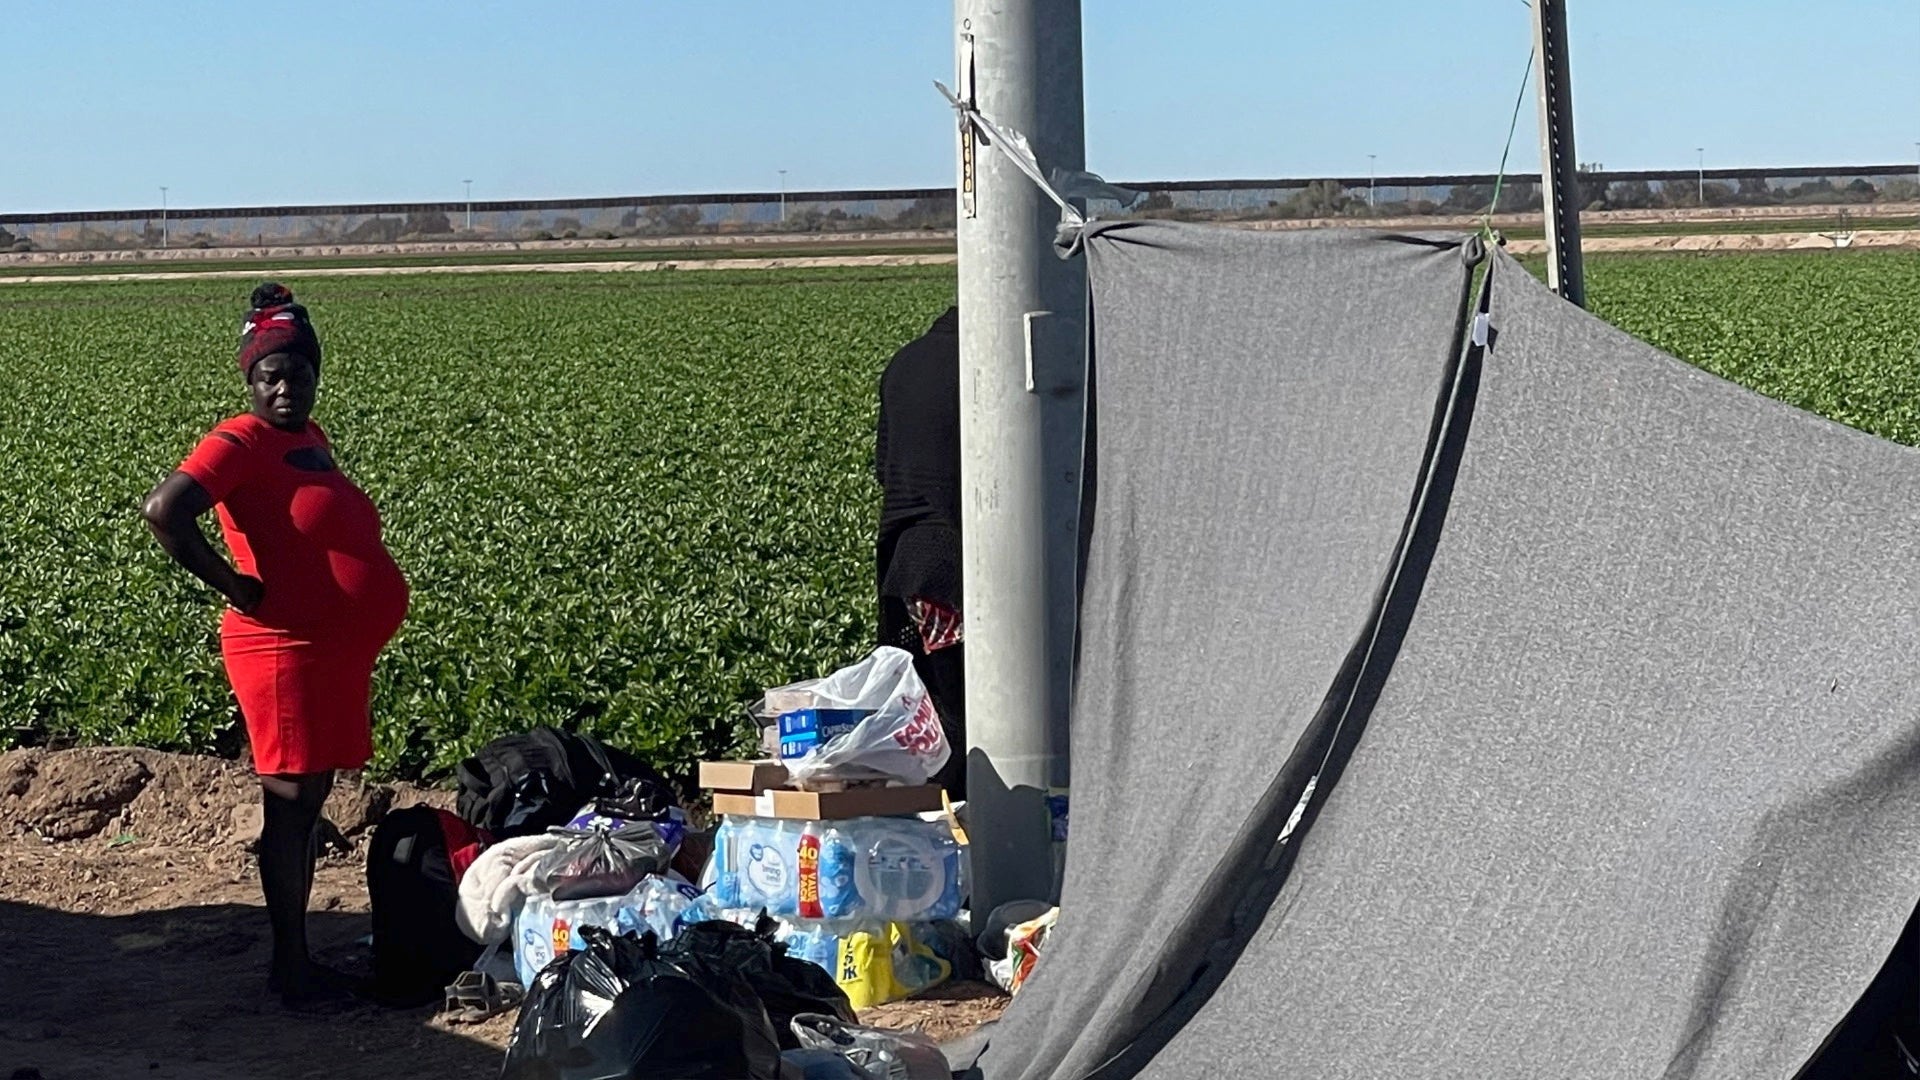 Migrants exploiting border wall gaps contaminate crops, threaten nation's food security, Arizona farmers say